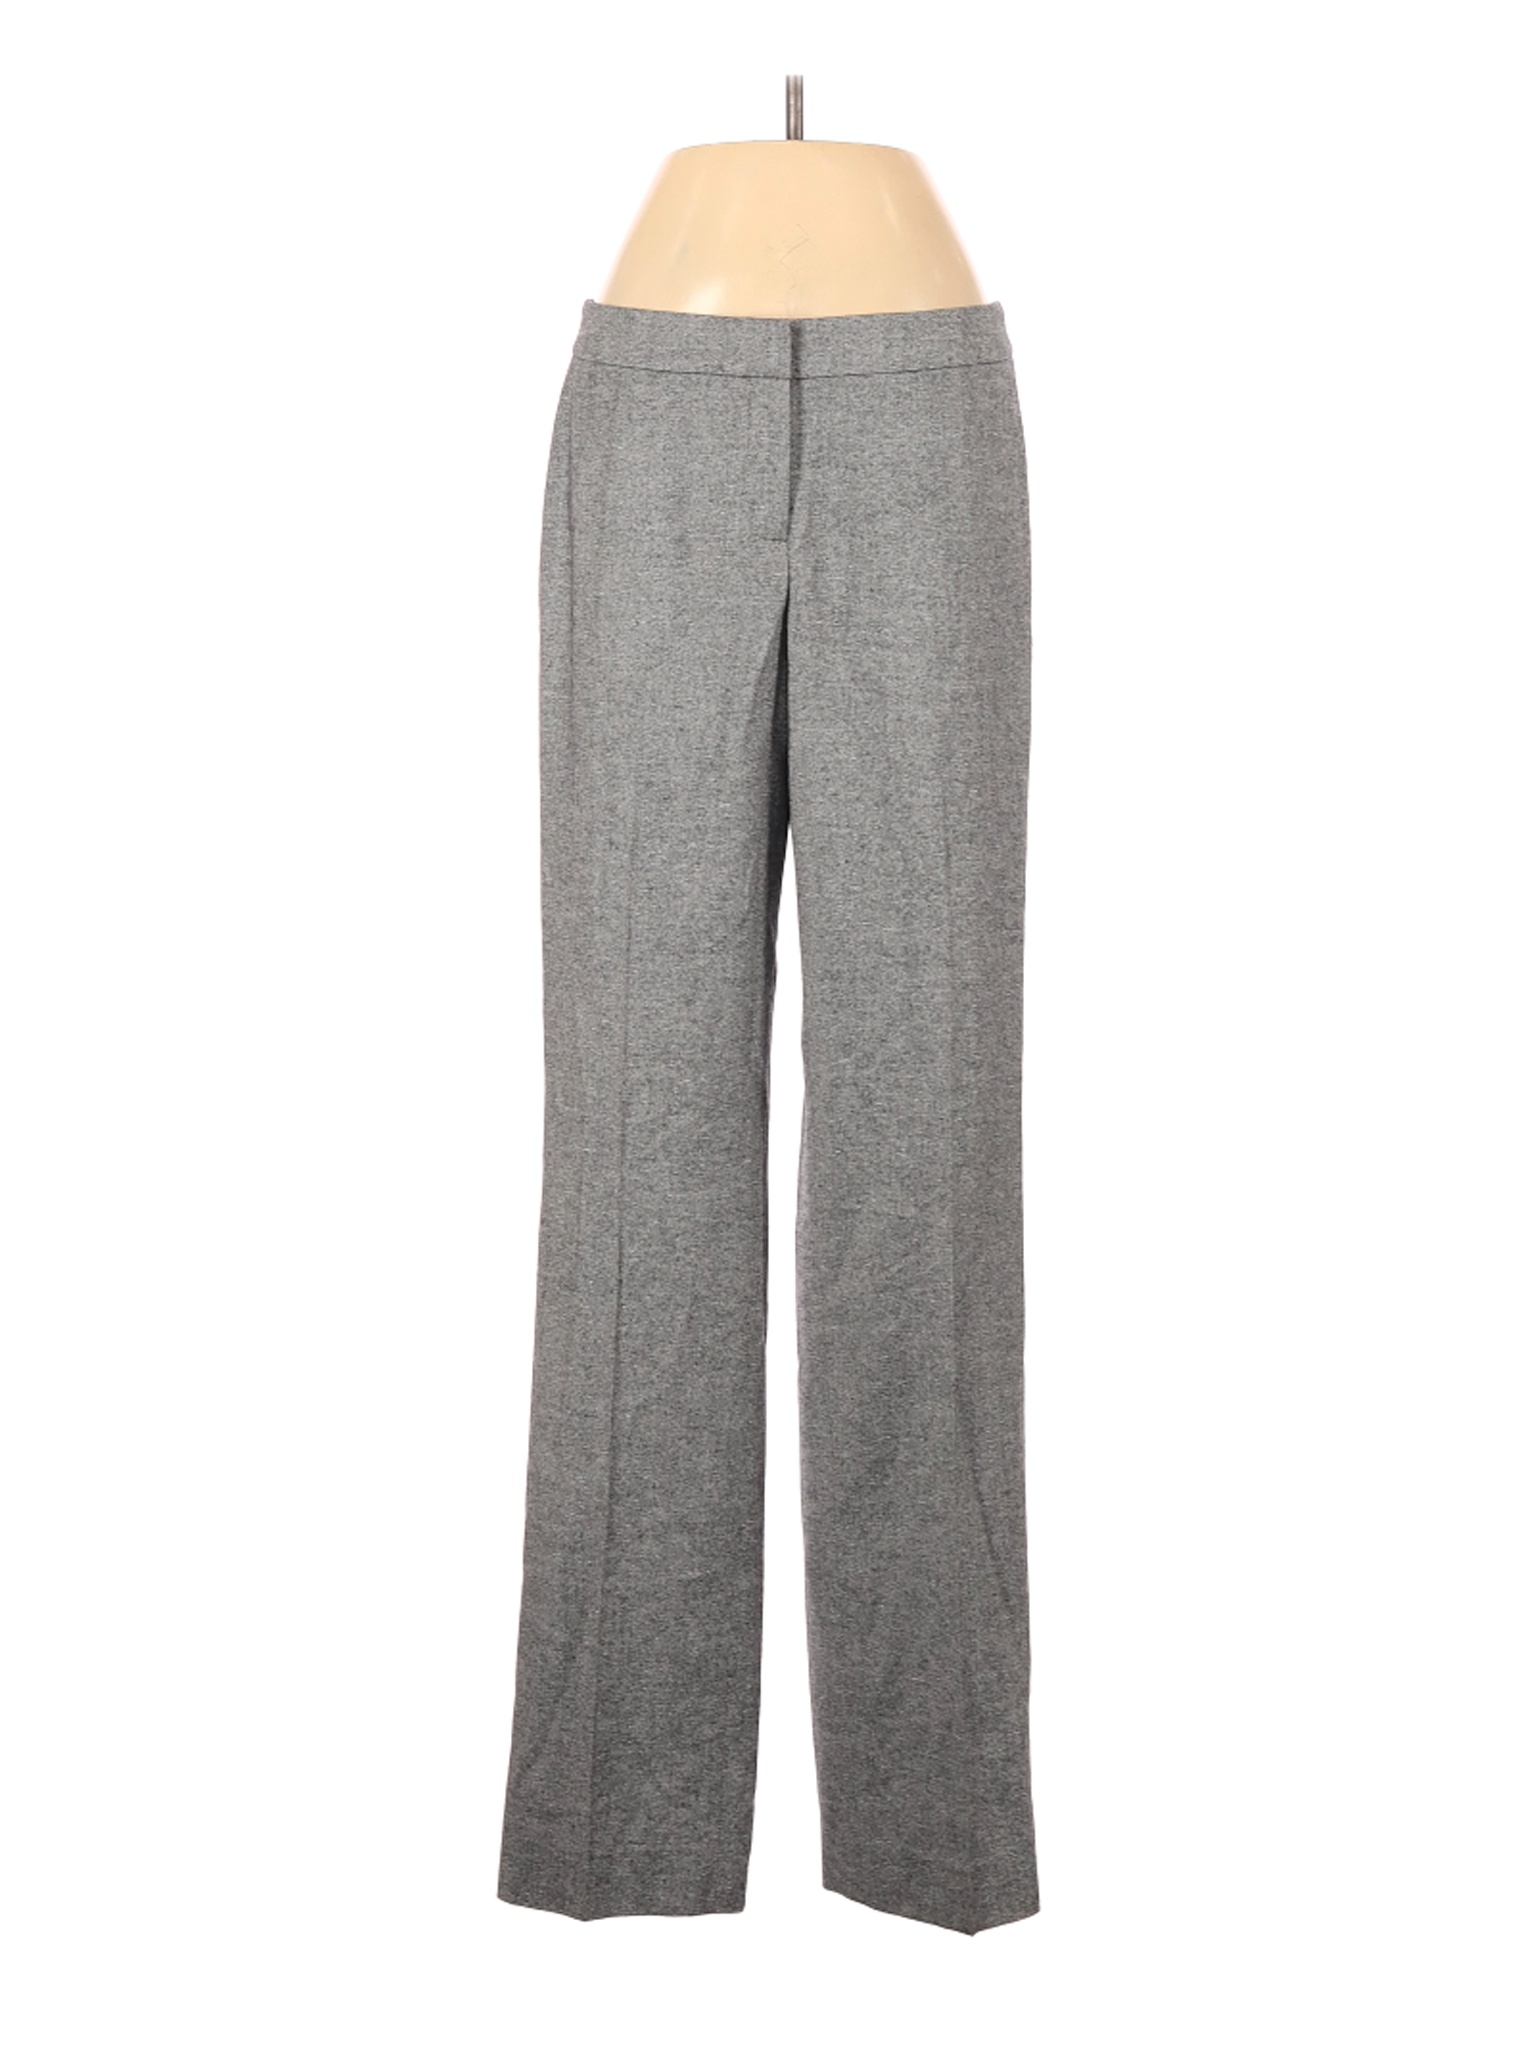 NWT Lafayette 148 New York Women Gray Silk Pants 4 | eBay